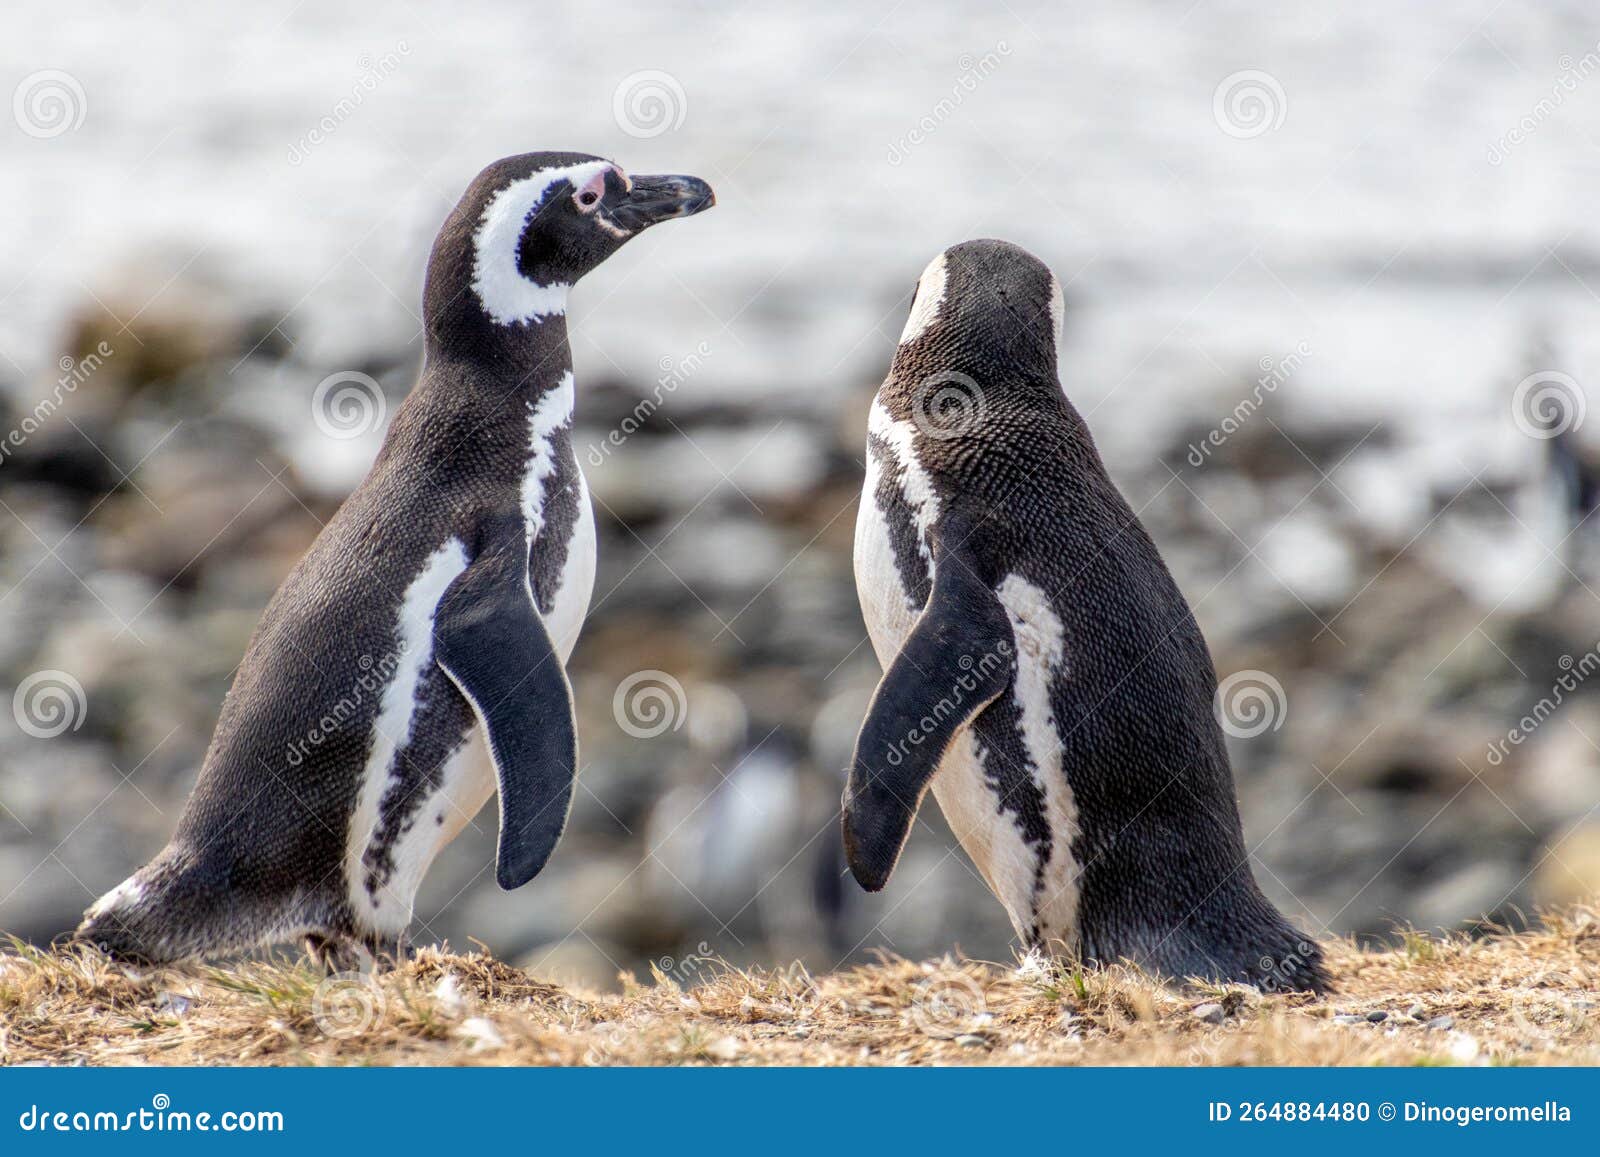 couple of penguins chiean anctartica